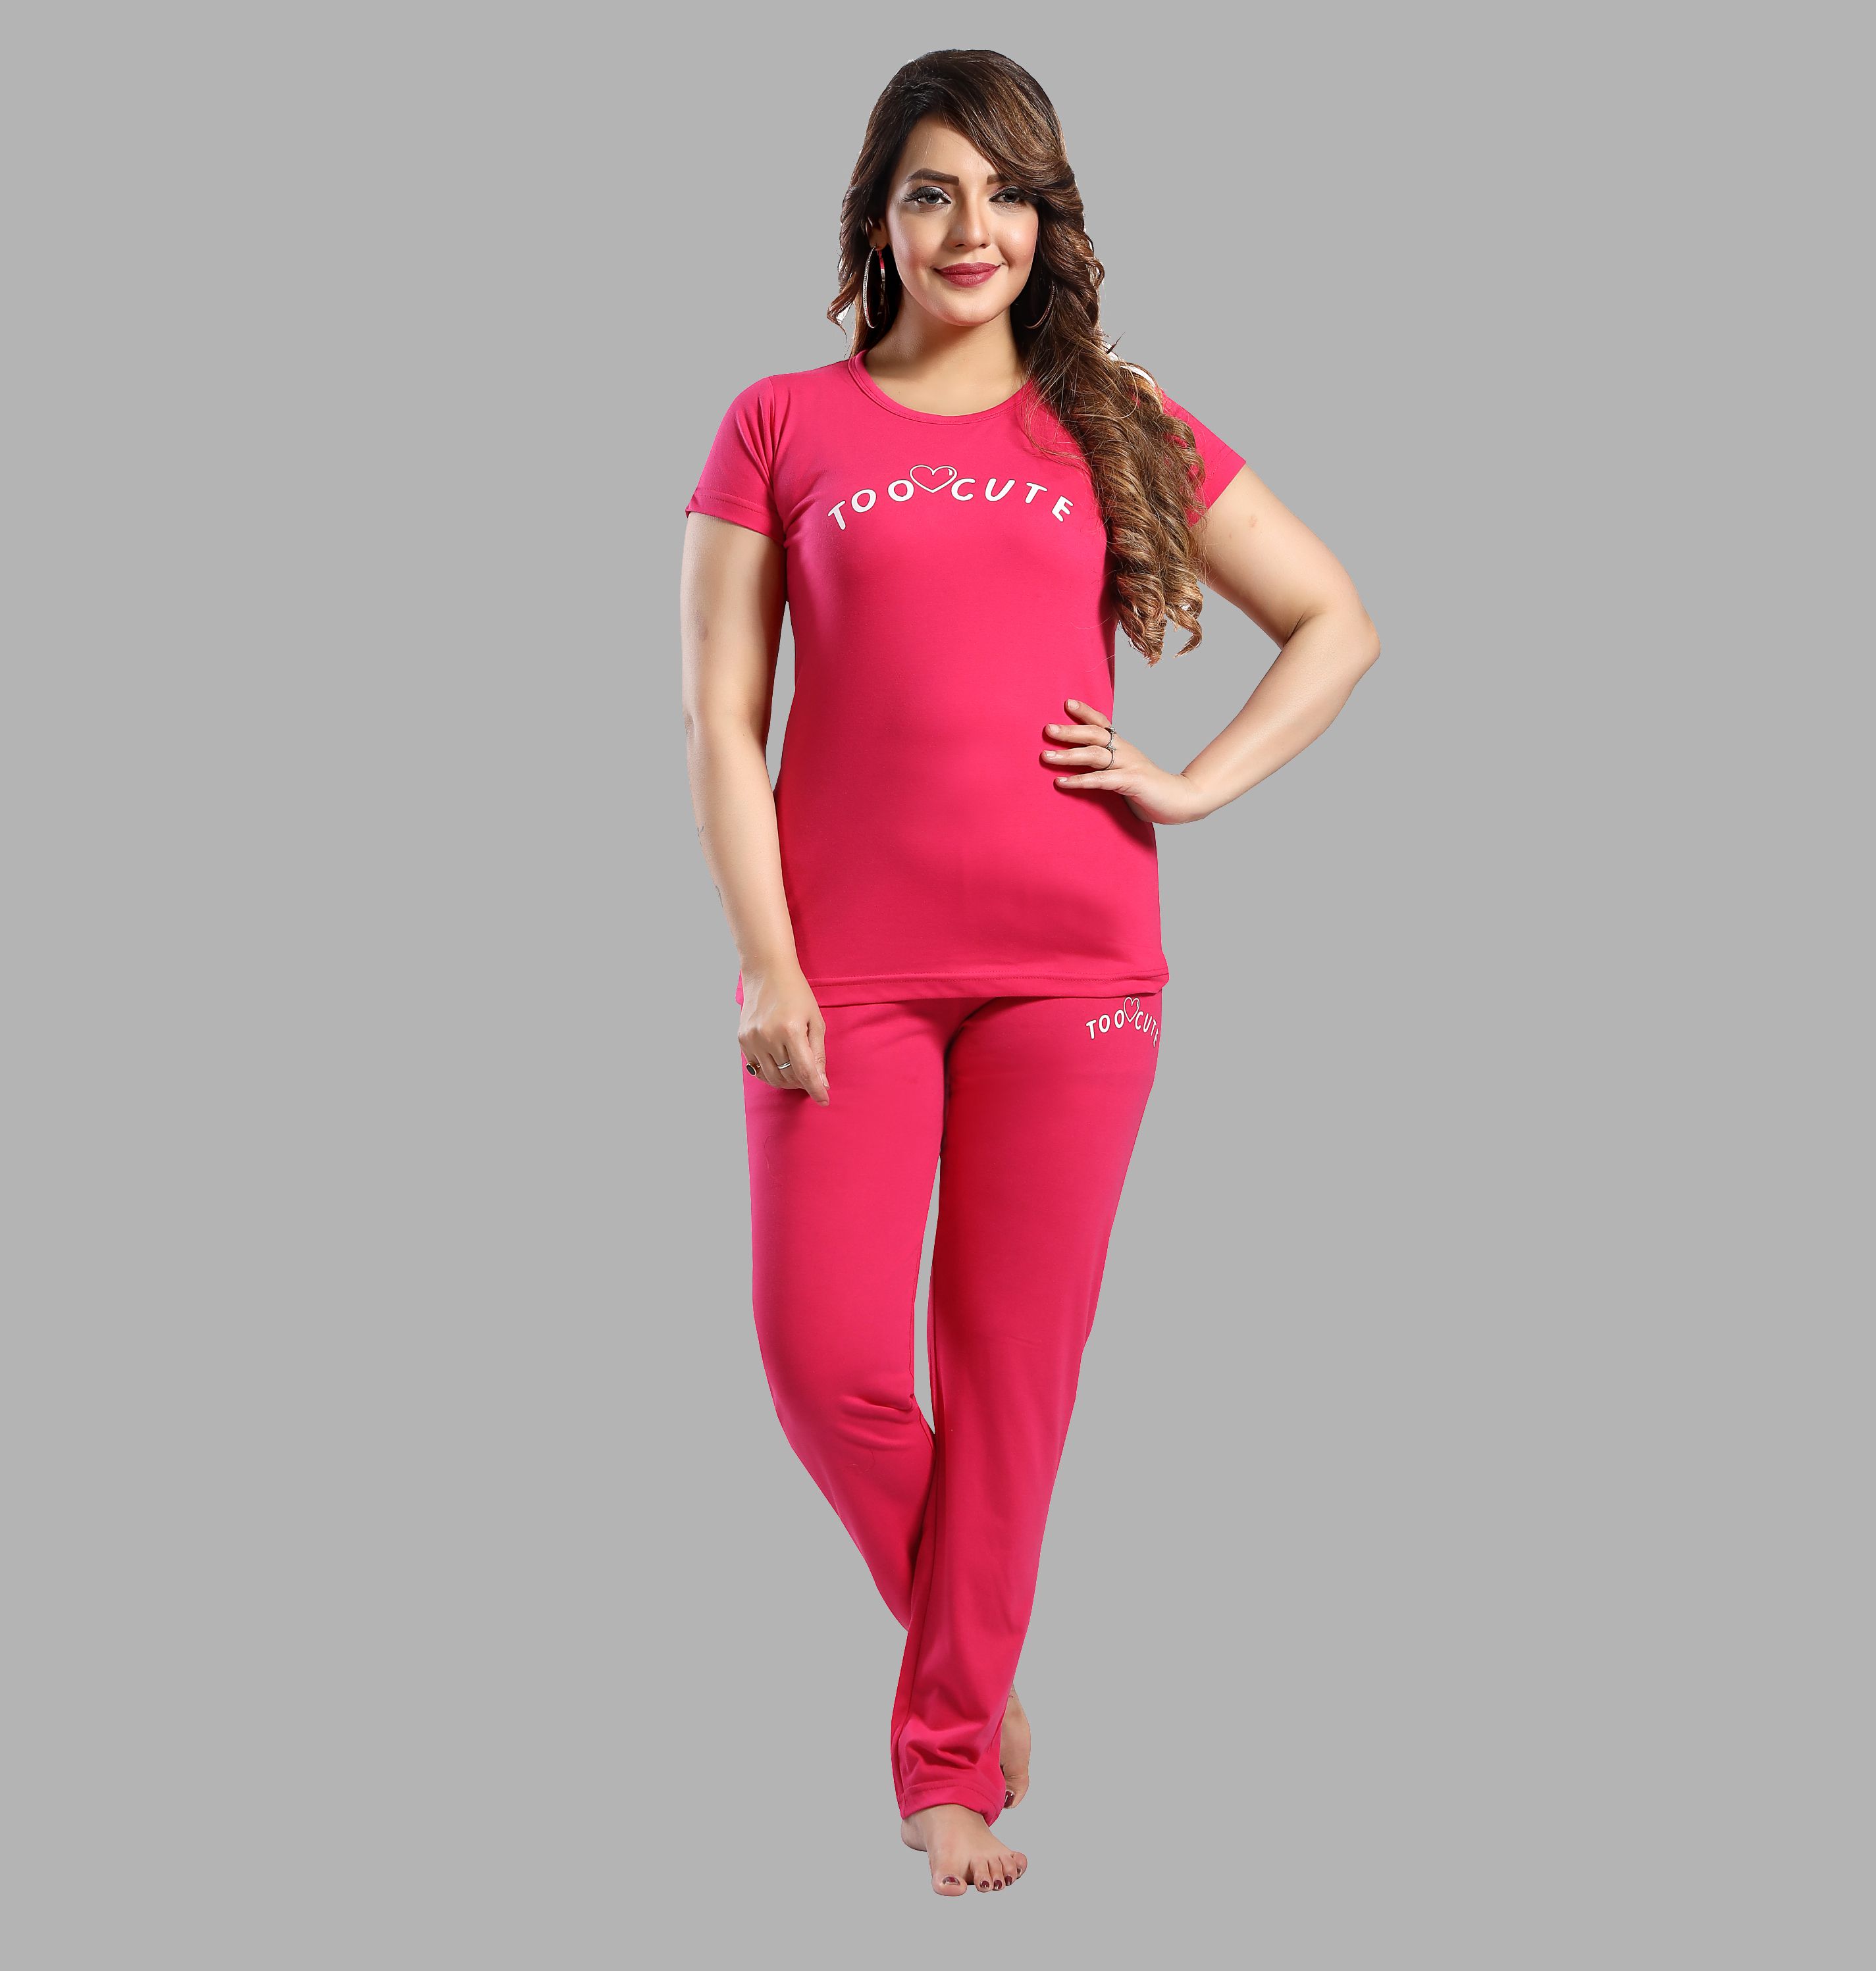     			G4Girl - Pink Hosiery Women's Nightwear Nightsuit Sets ( Pack of 1 )